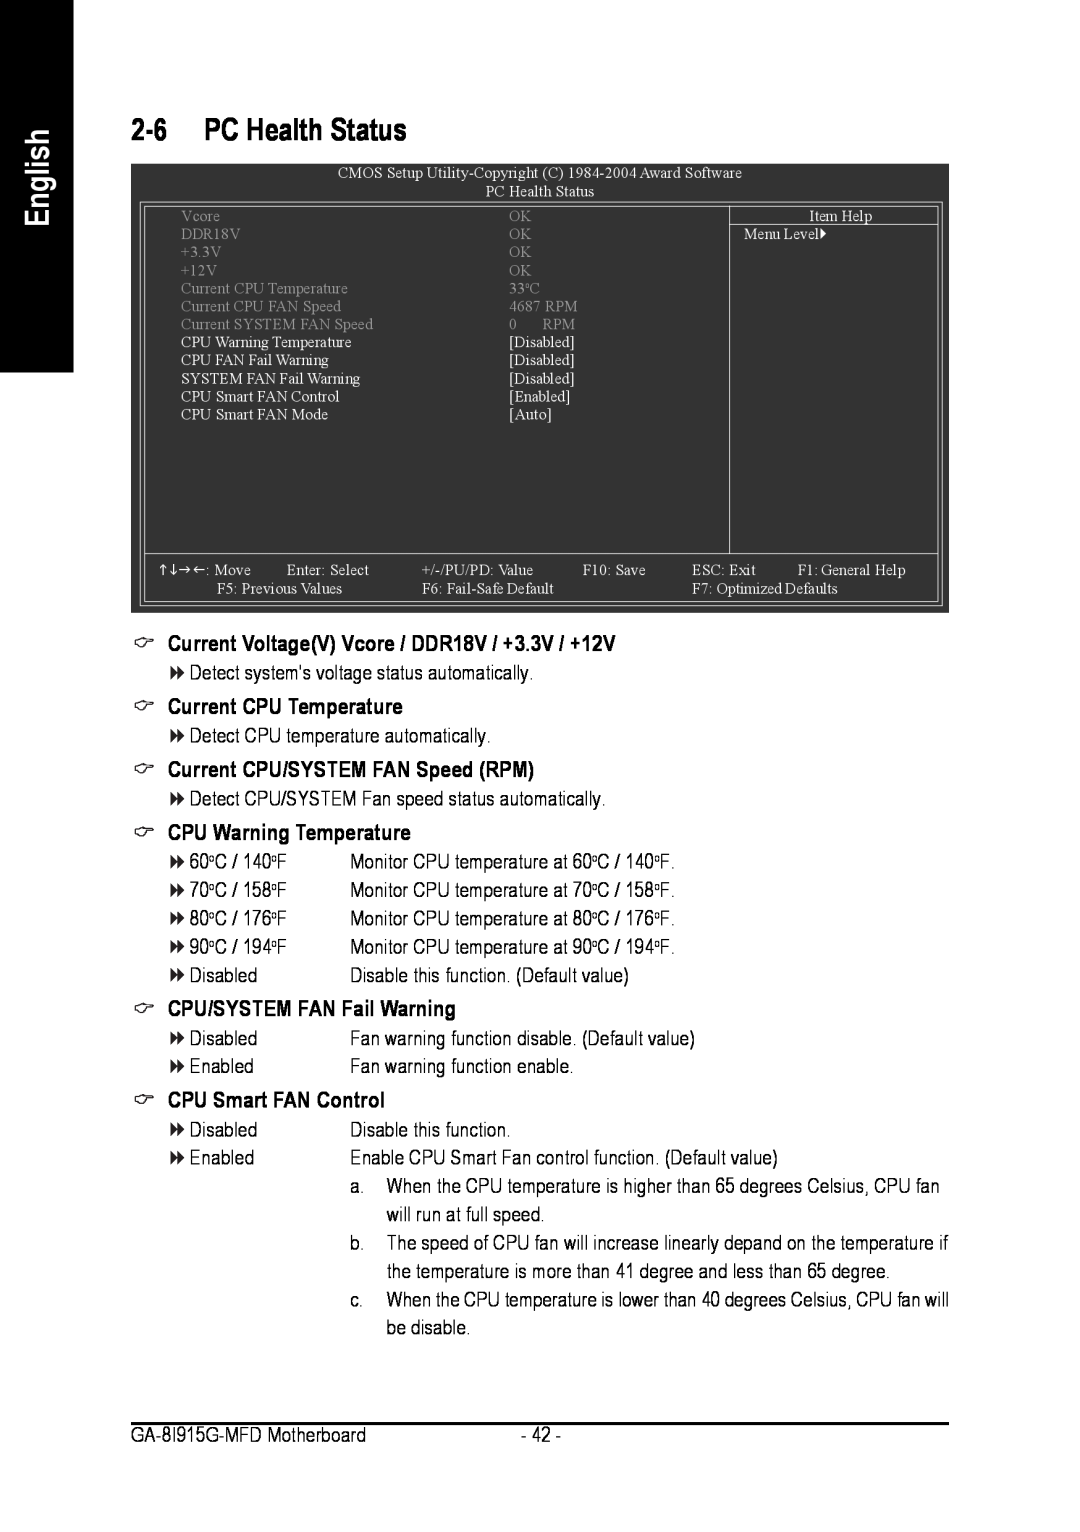 Intel GA-8I915G-MFD PC Health Status, Current VoltageV Vcore / DDR18V / +3.3V / +12V, Current CPU Temperature, English 